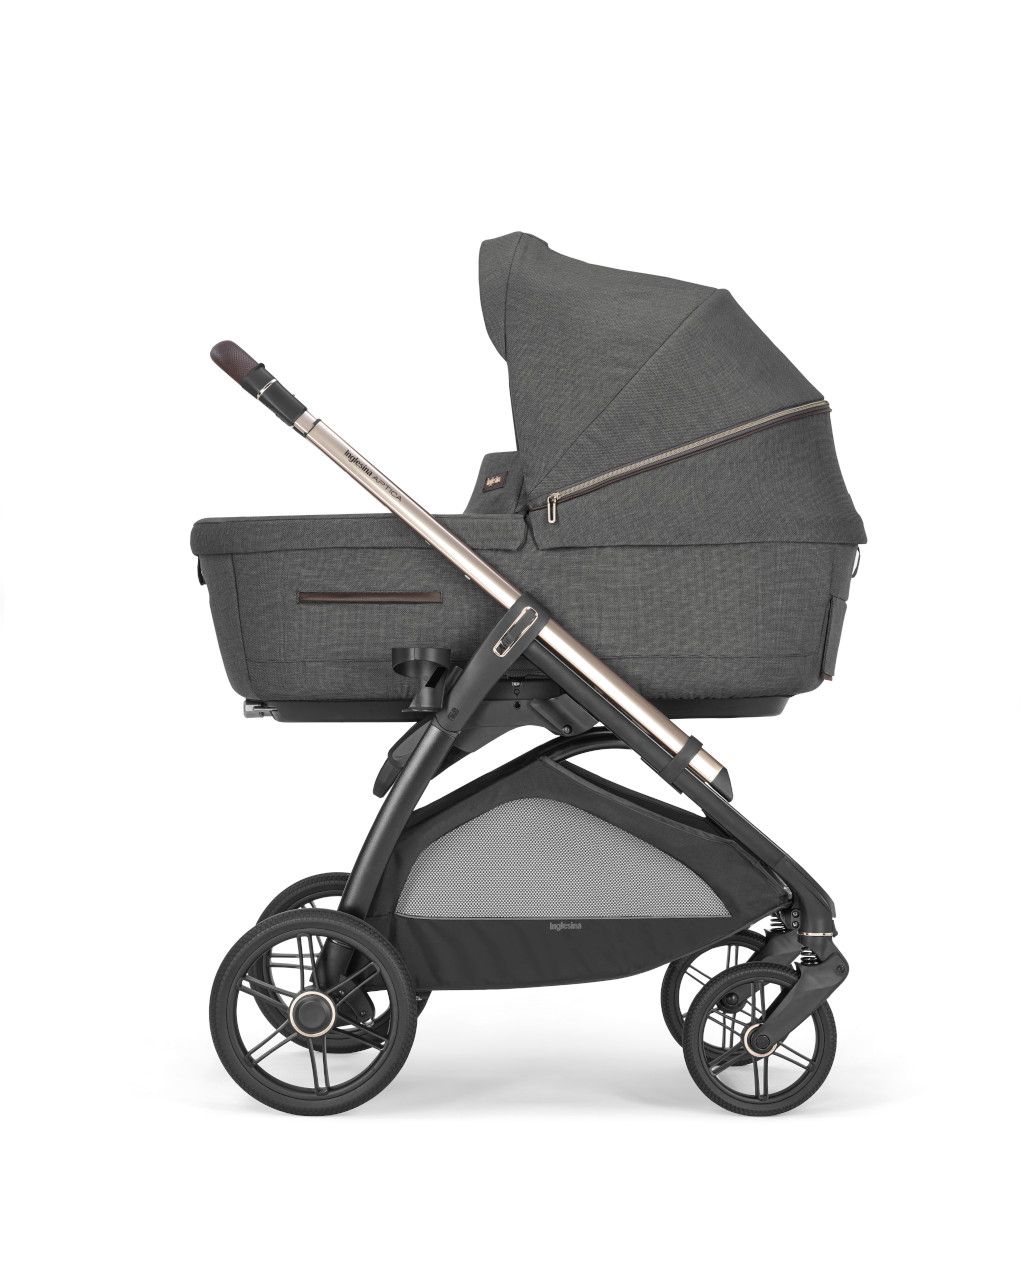 Aptica system quattro color gris terciopelo con silla de coche infantil darwin y chasis paladio - inglesina - Inglesina